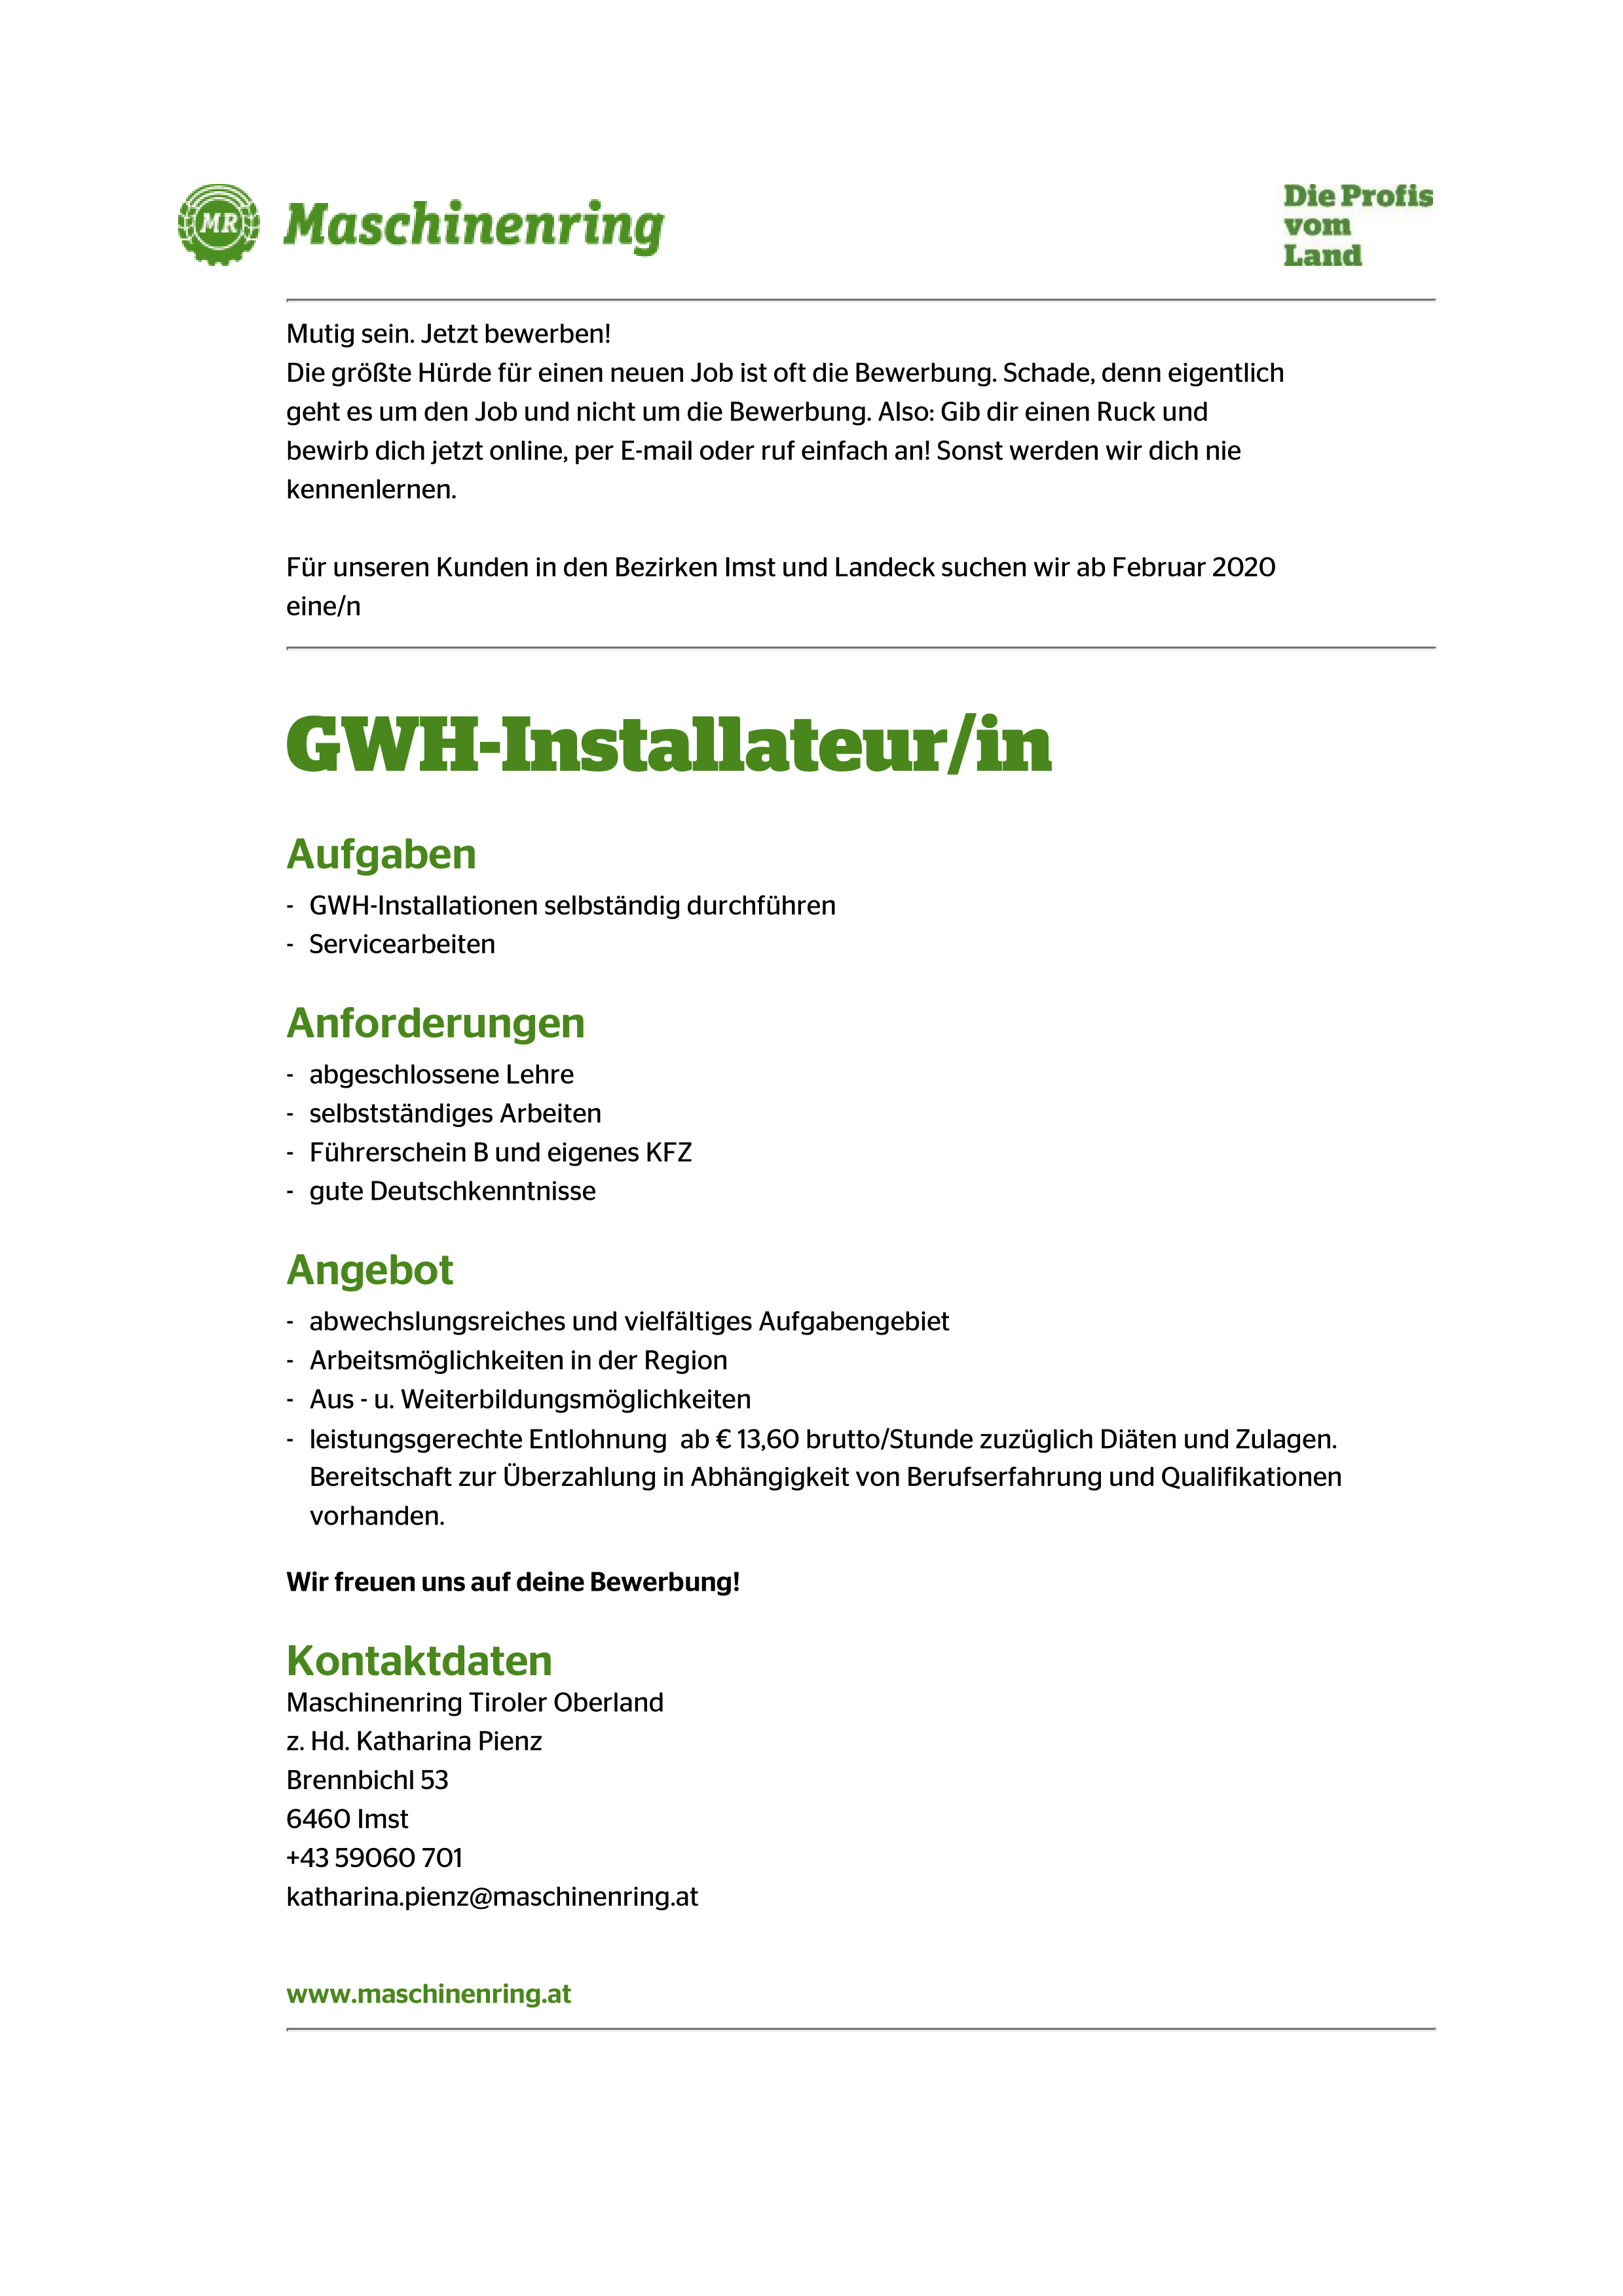 GWH-Installateur/in